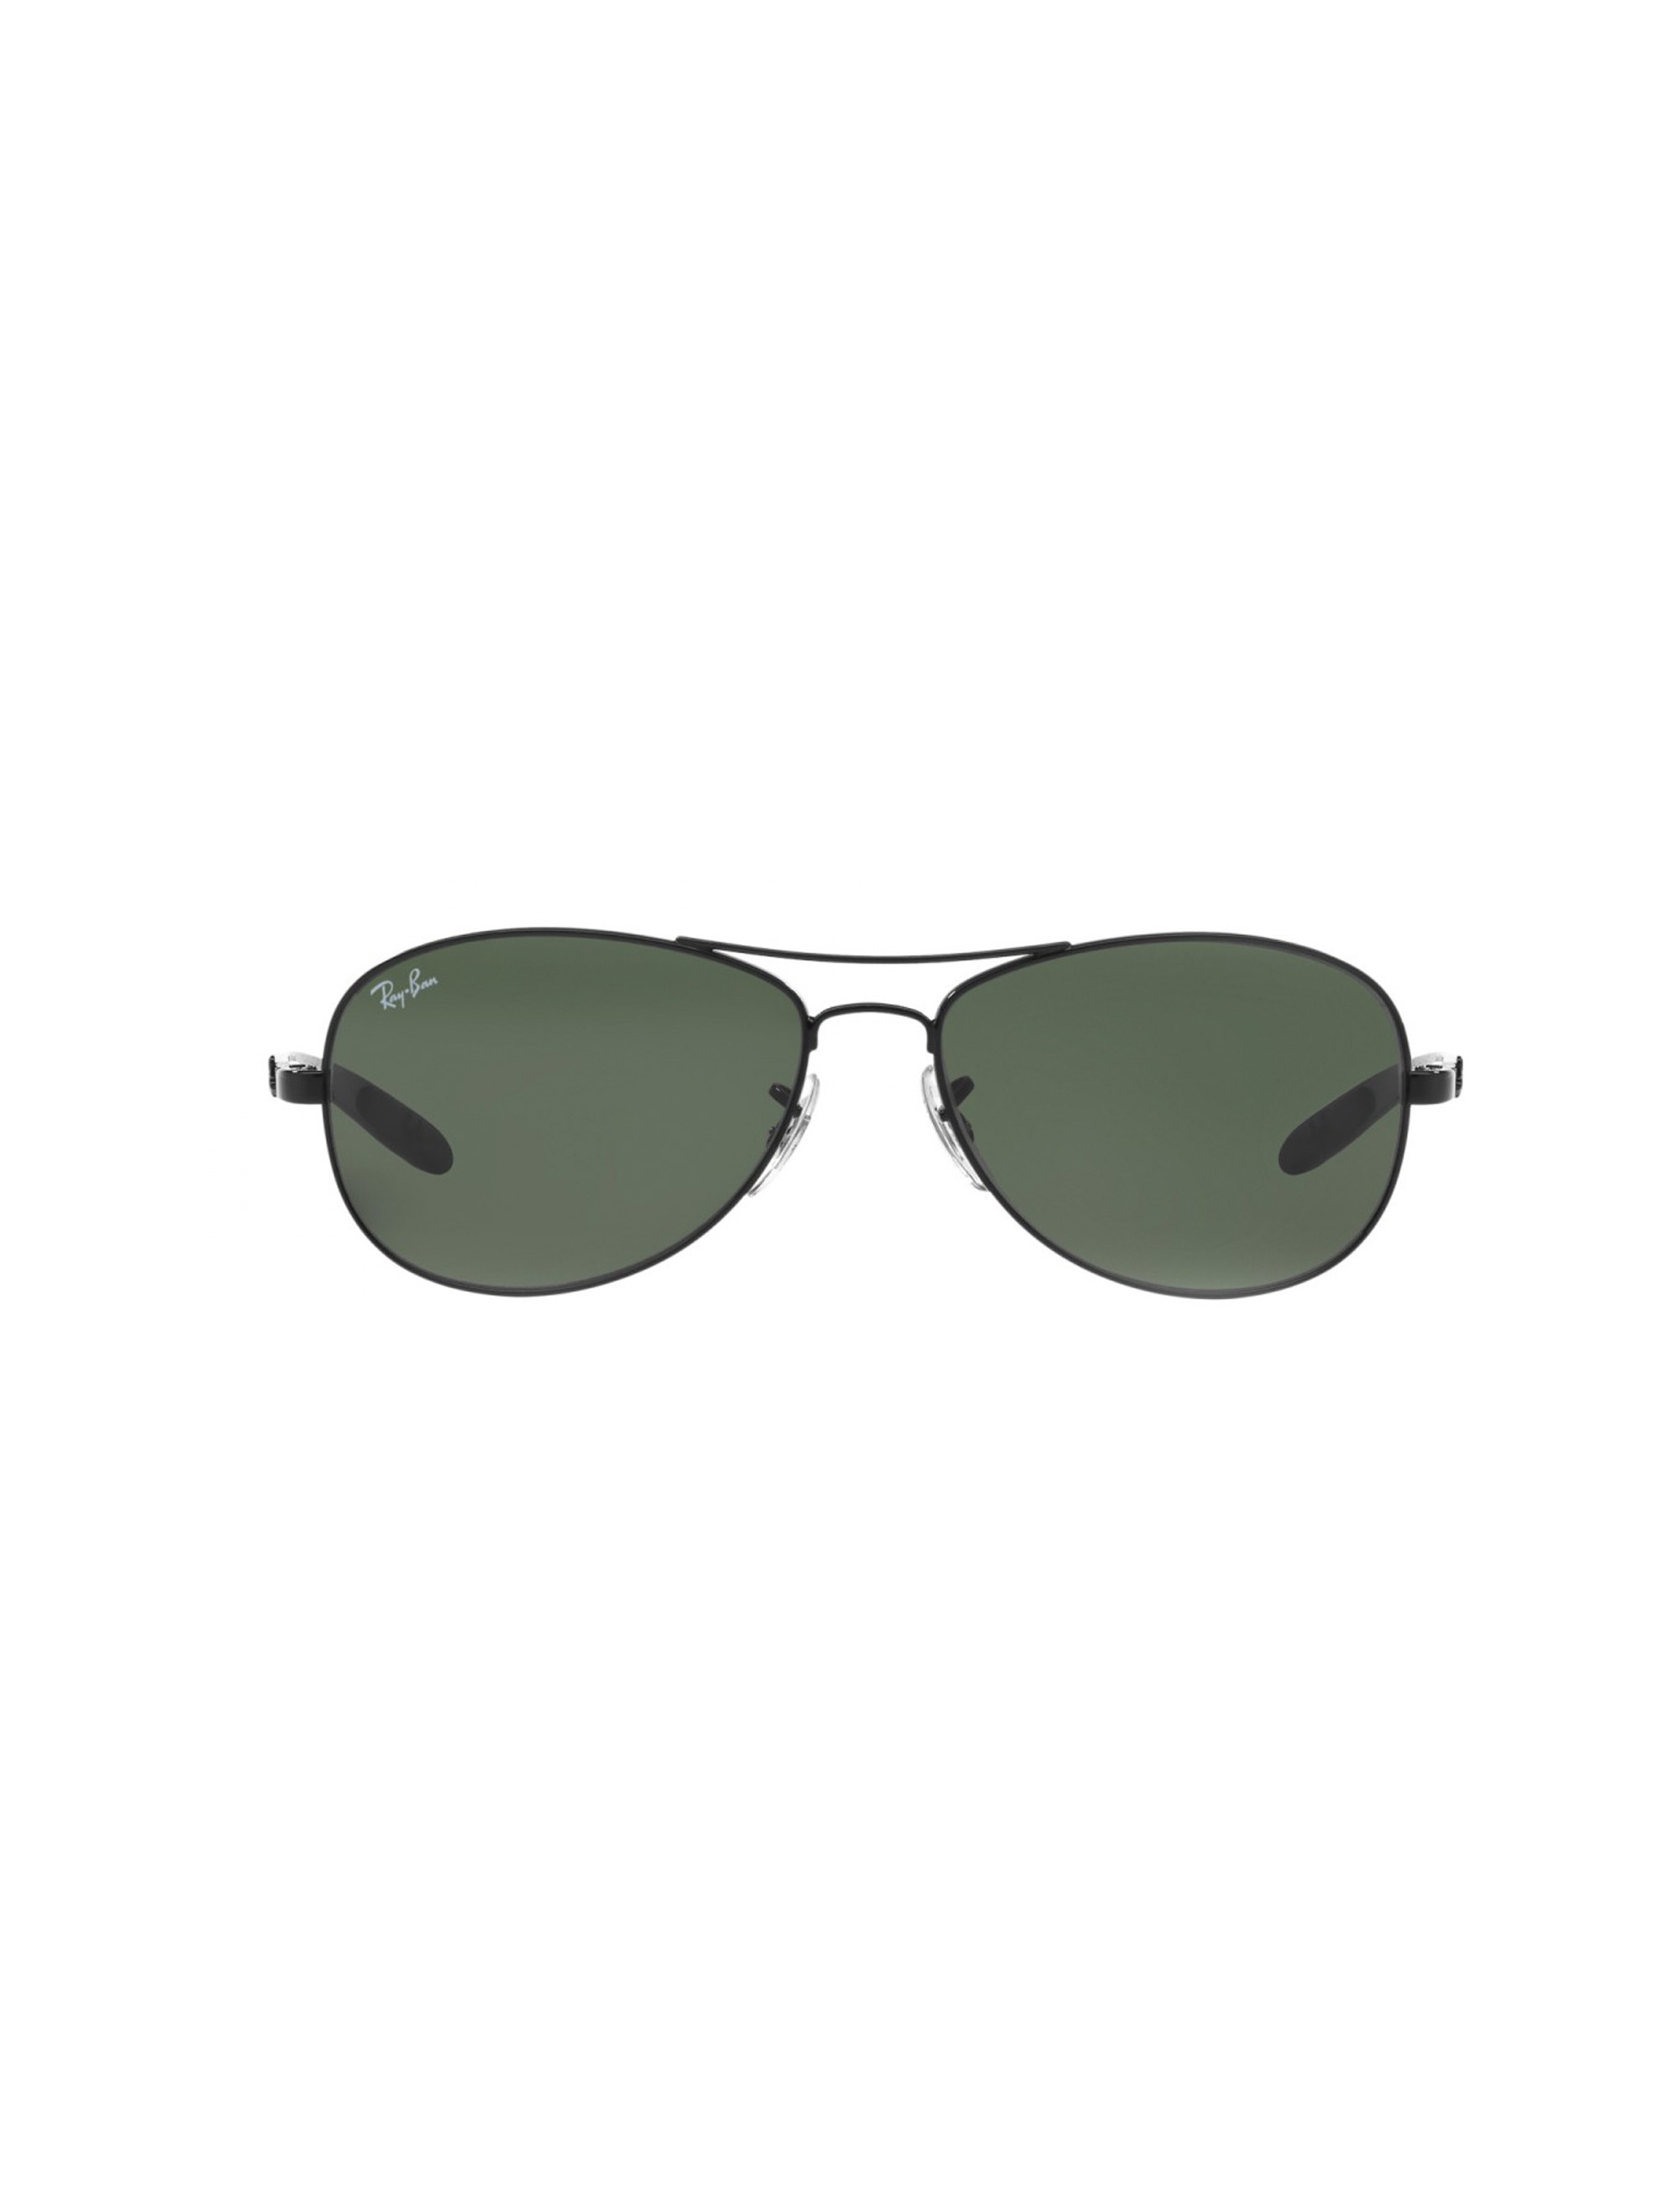 عینک آفتابی ری بن مدل 8301-2 - مشکی - 2